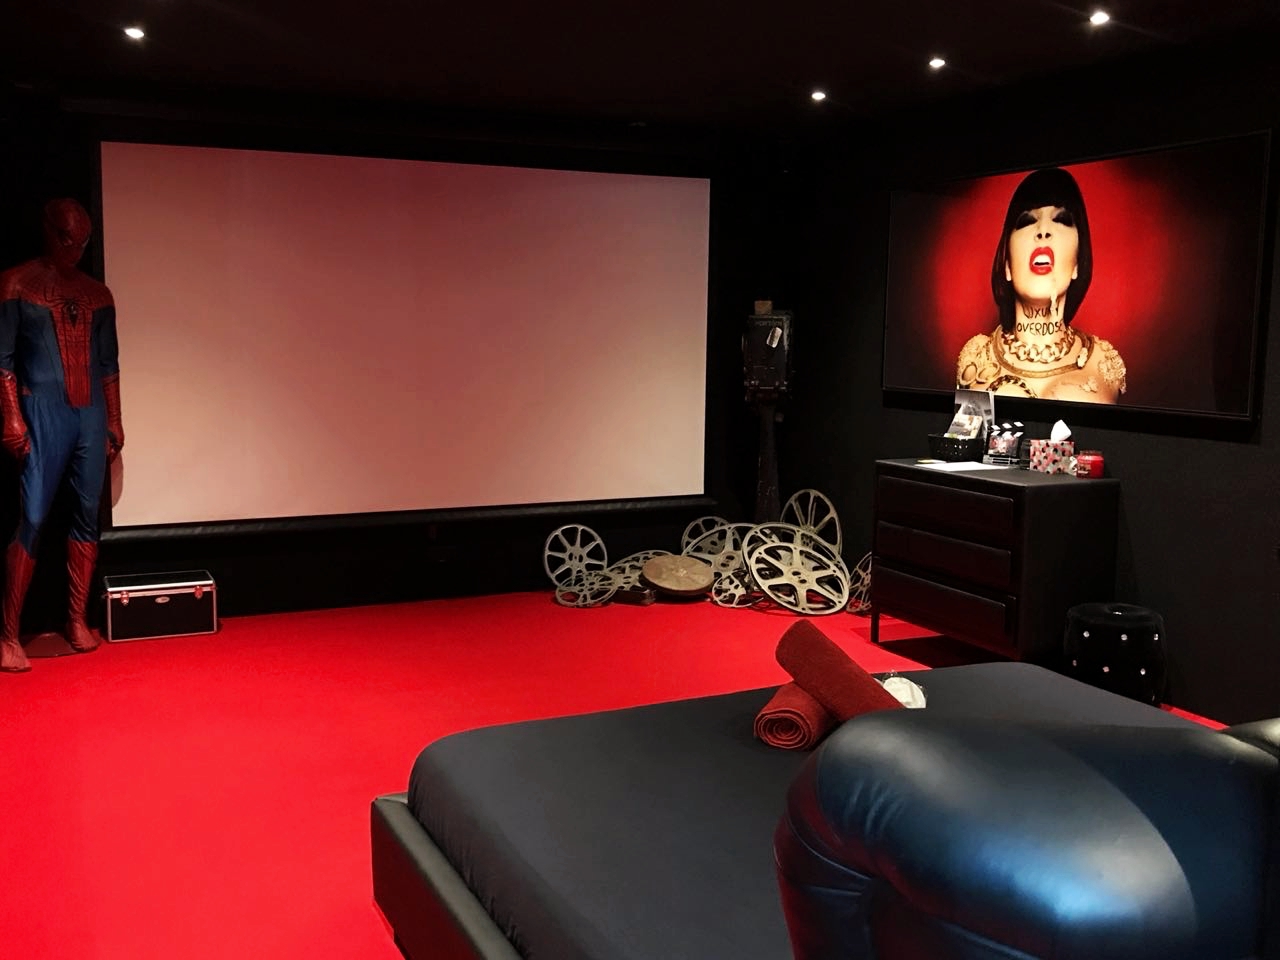 The Cine Room